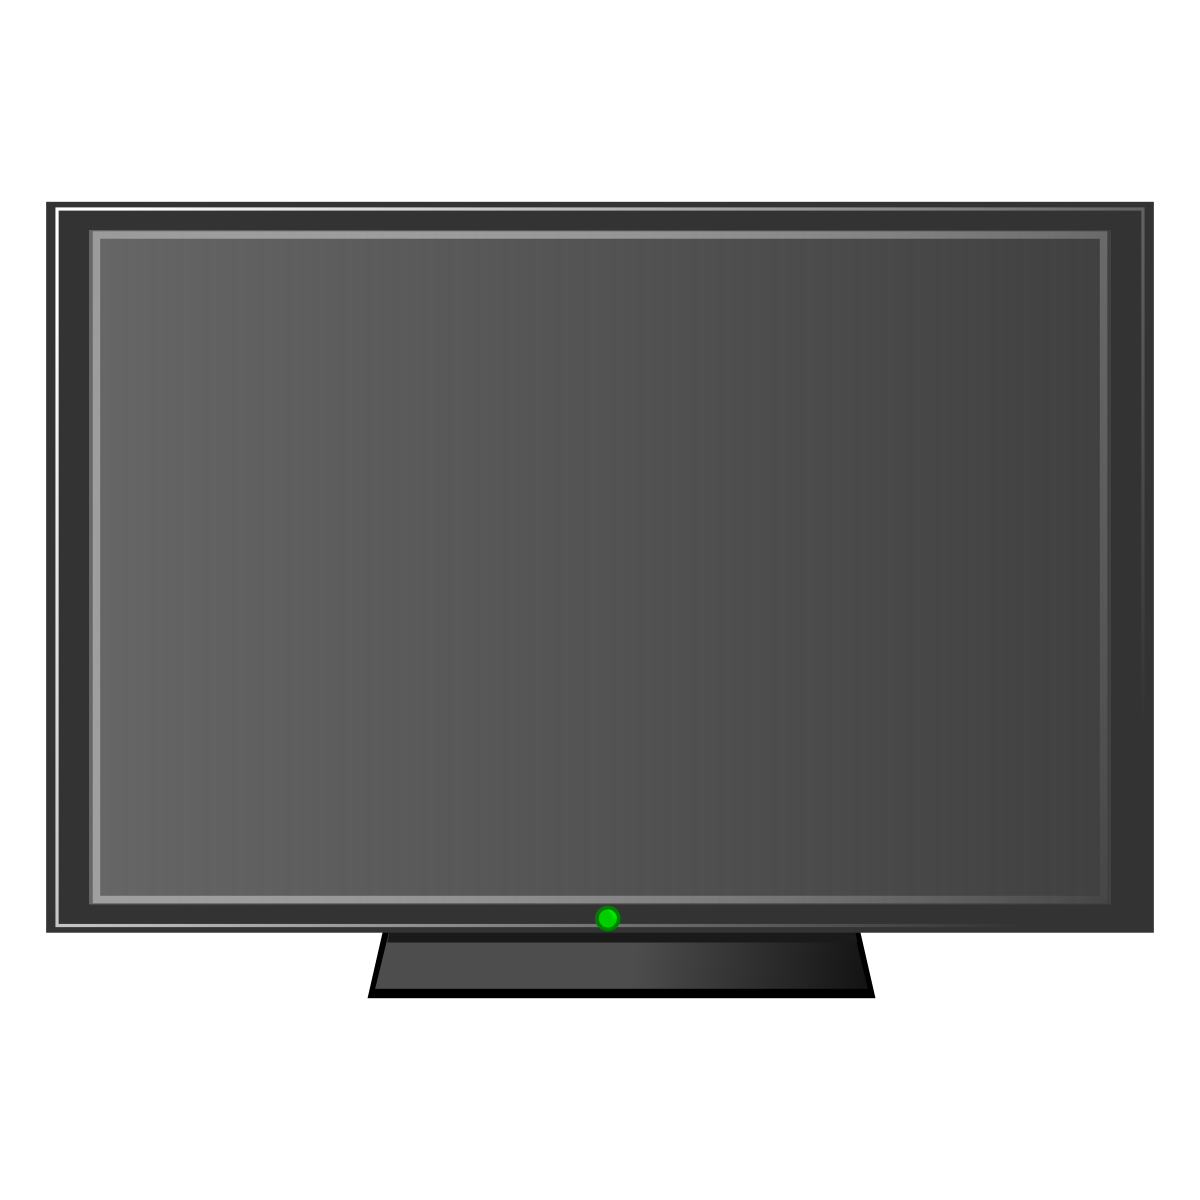 Flat Screen TV PNG HD Image